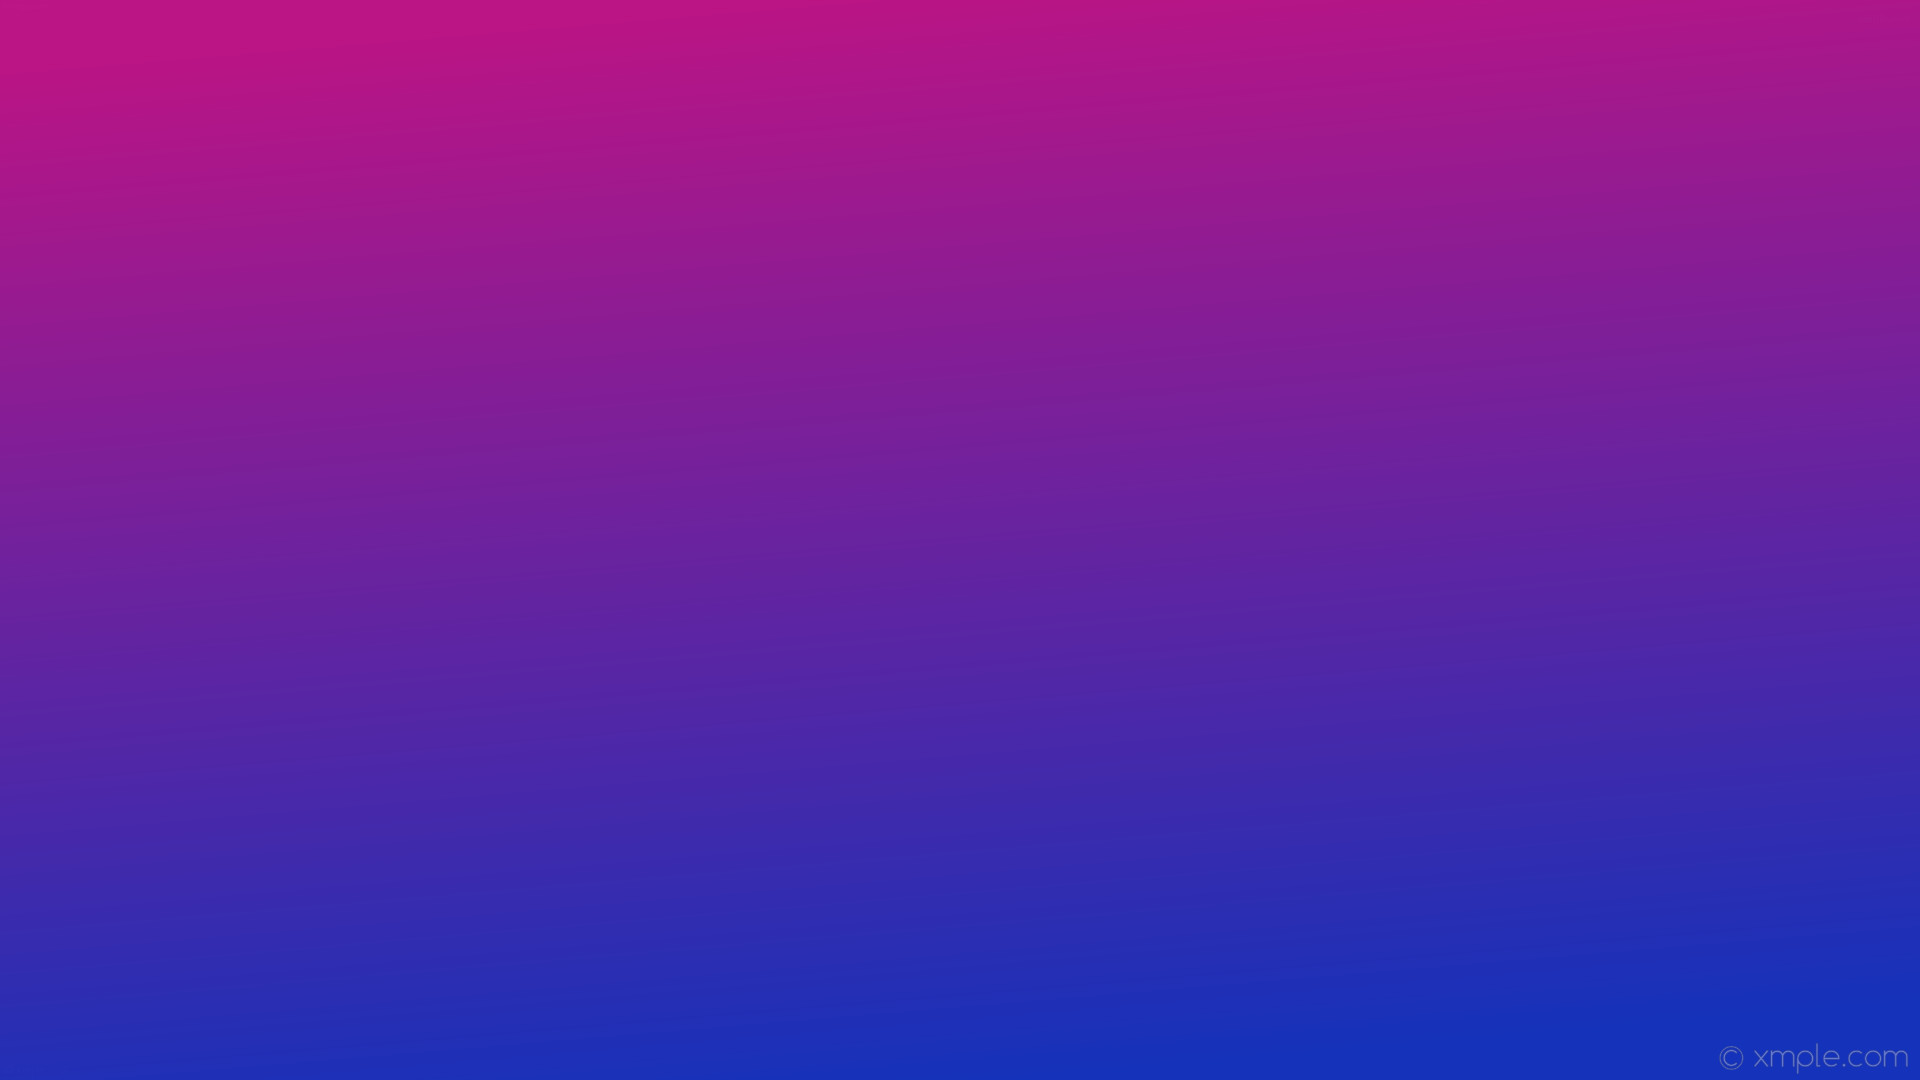 Purple Ombre Wallpaper Blue Violet Purple Pink Red 262513 Wallpaperuse